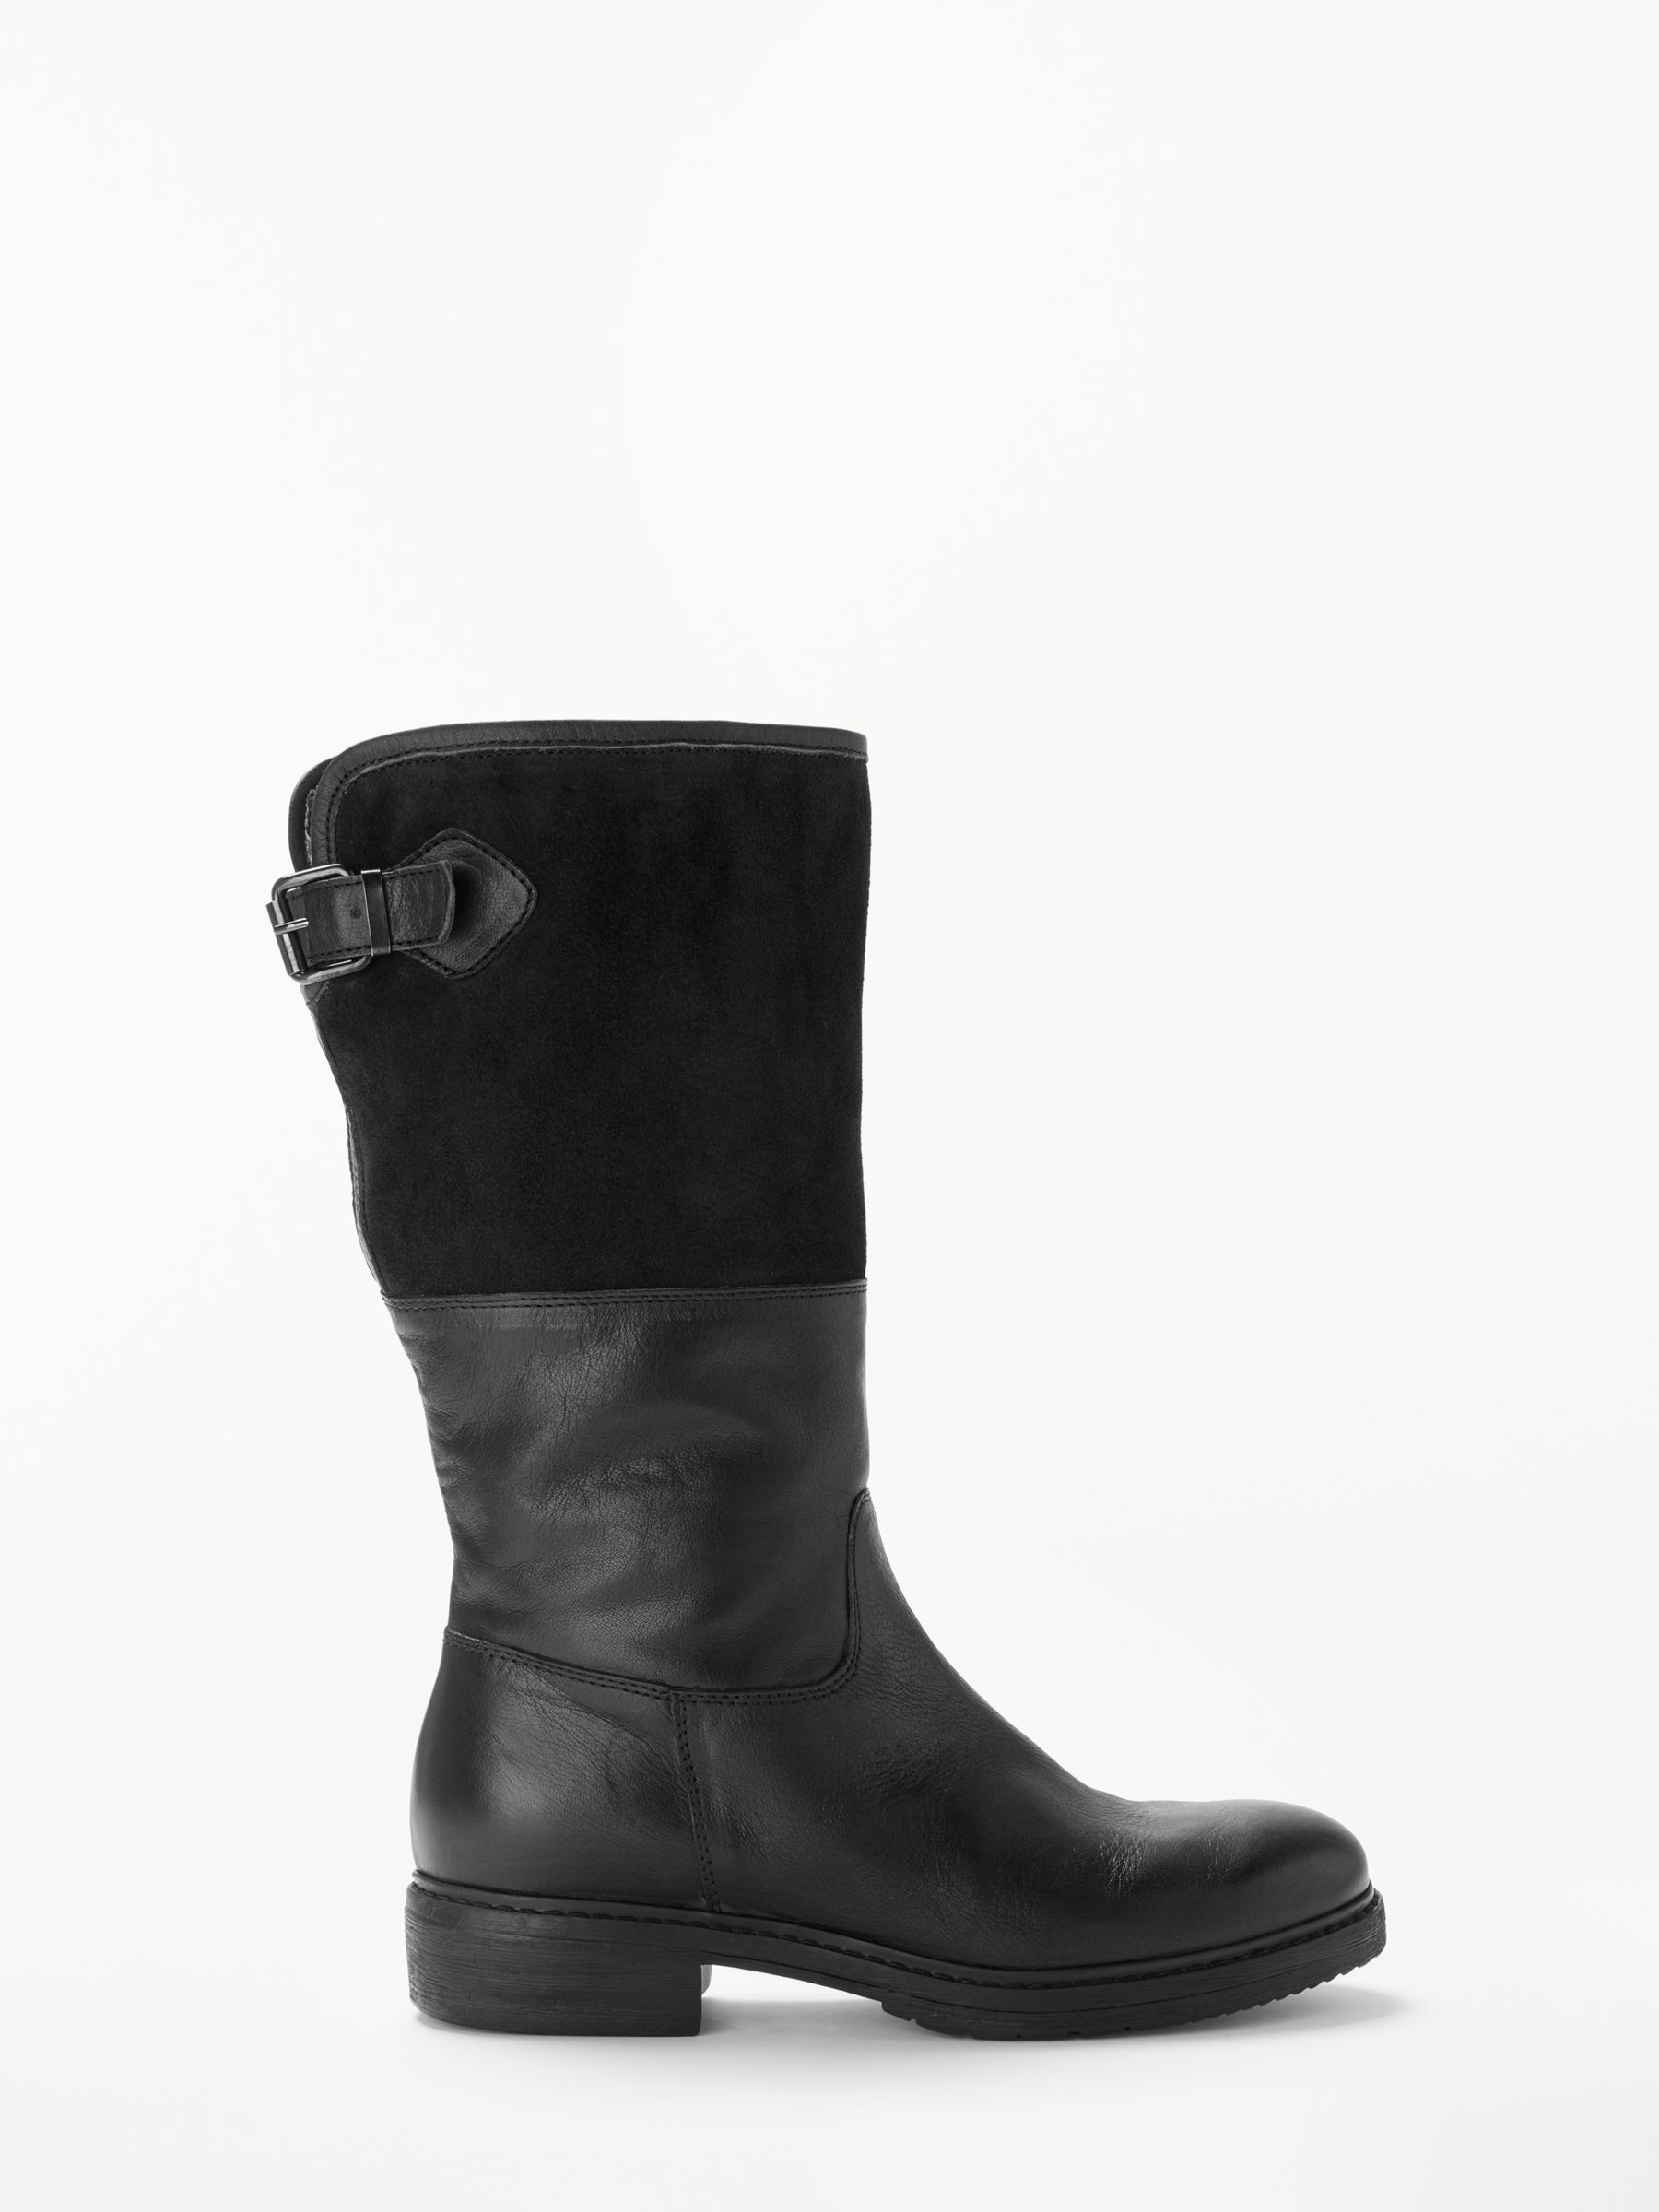 John Lewis & Partners Sophia Faux Fur Lined Boots, Black Leather